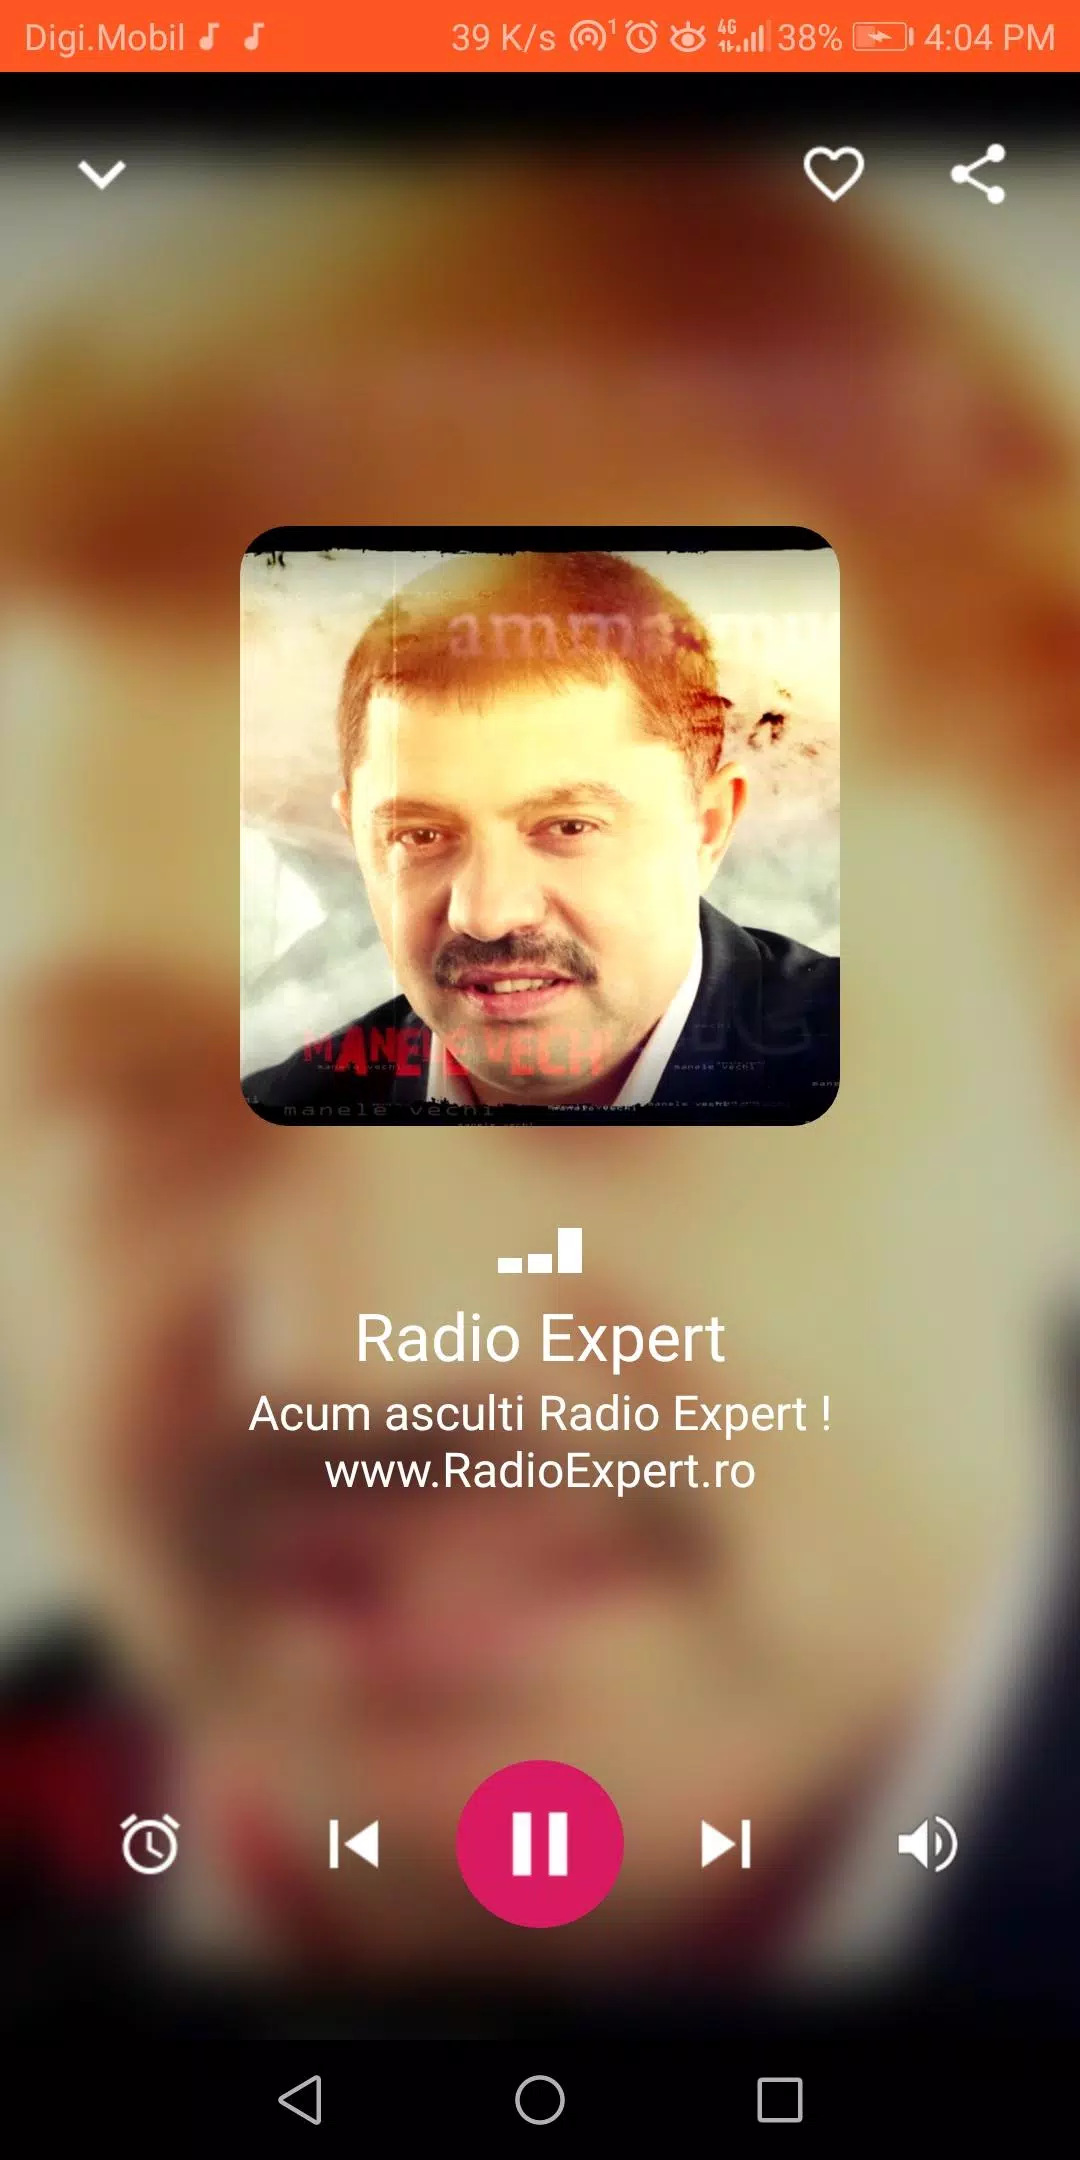 Radio Manele Live APK for Android Download